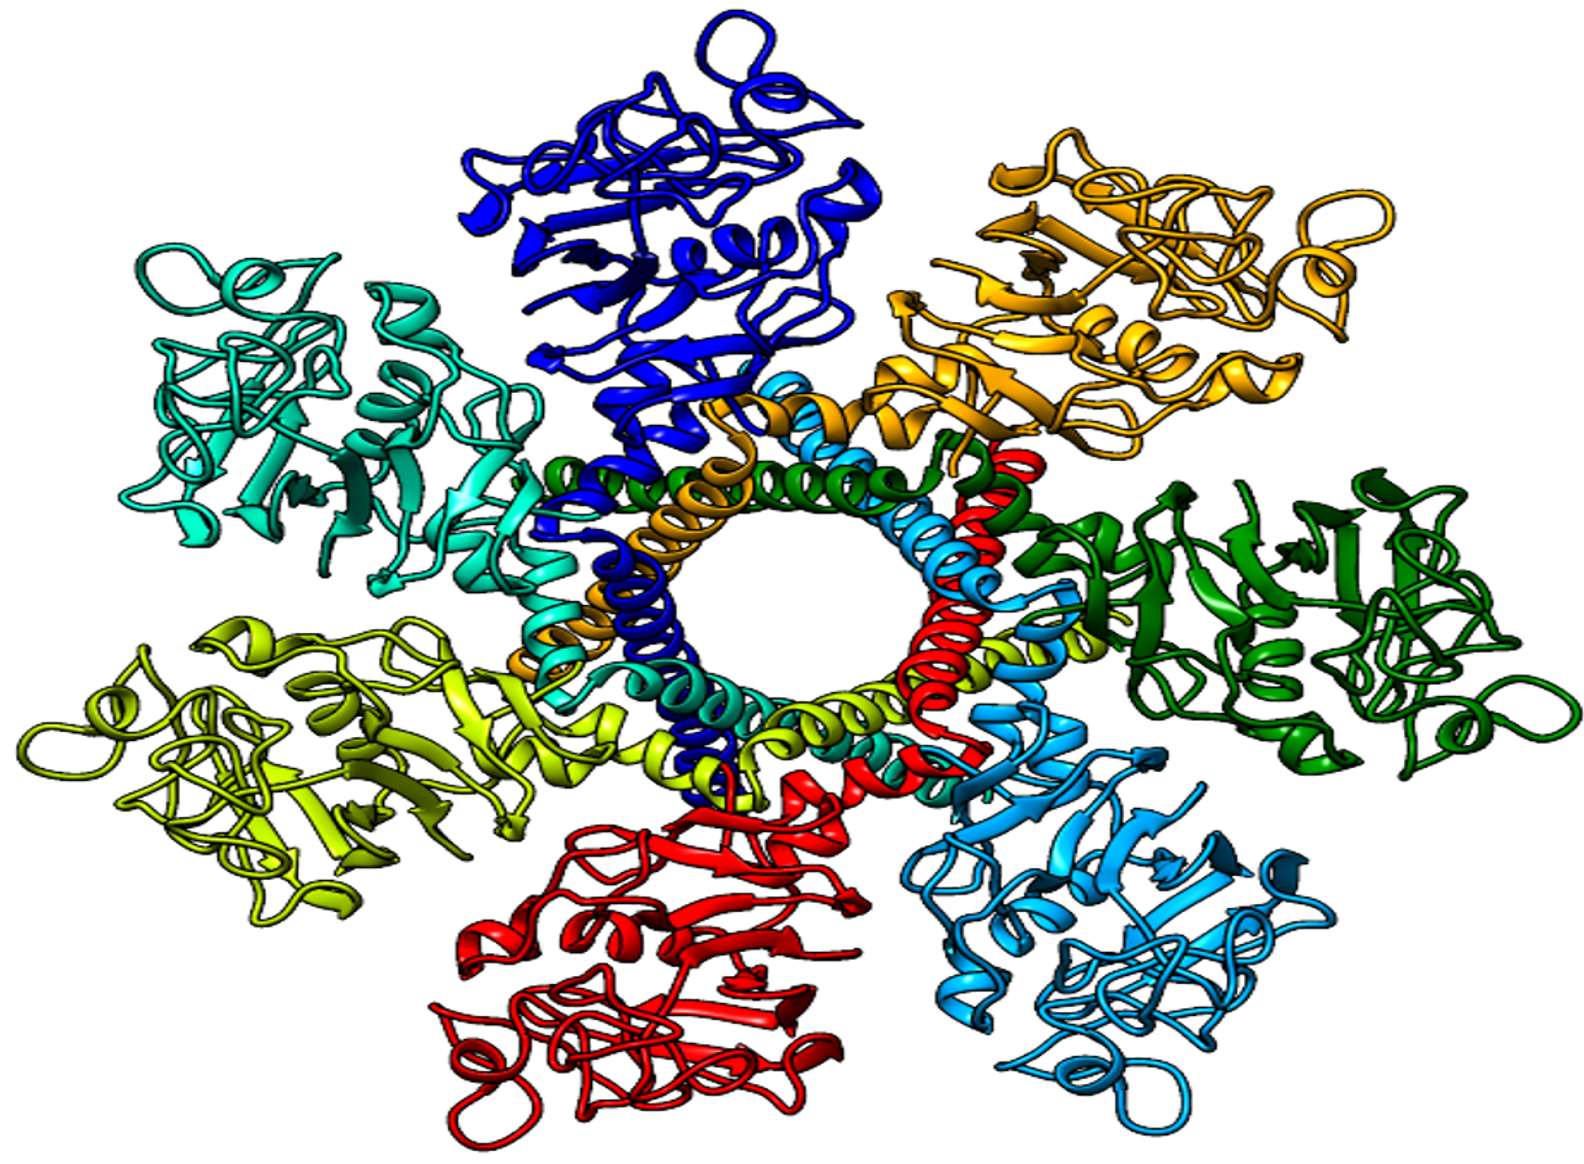 Homologiemodell des chimären rekombinanten Fusionsproteins Ang1 mimetic.